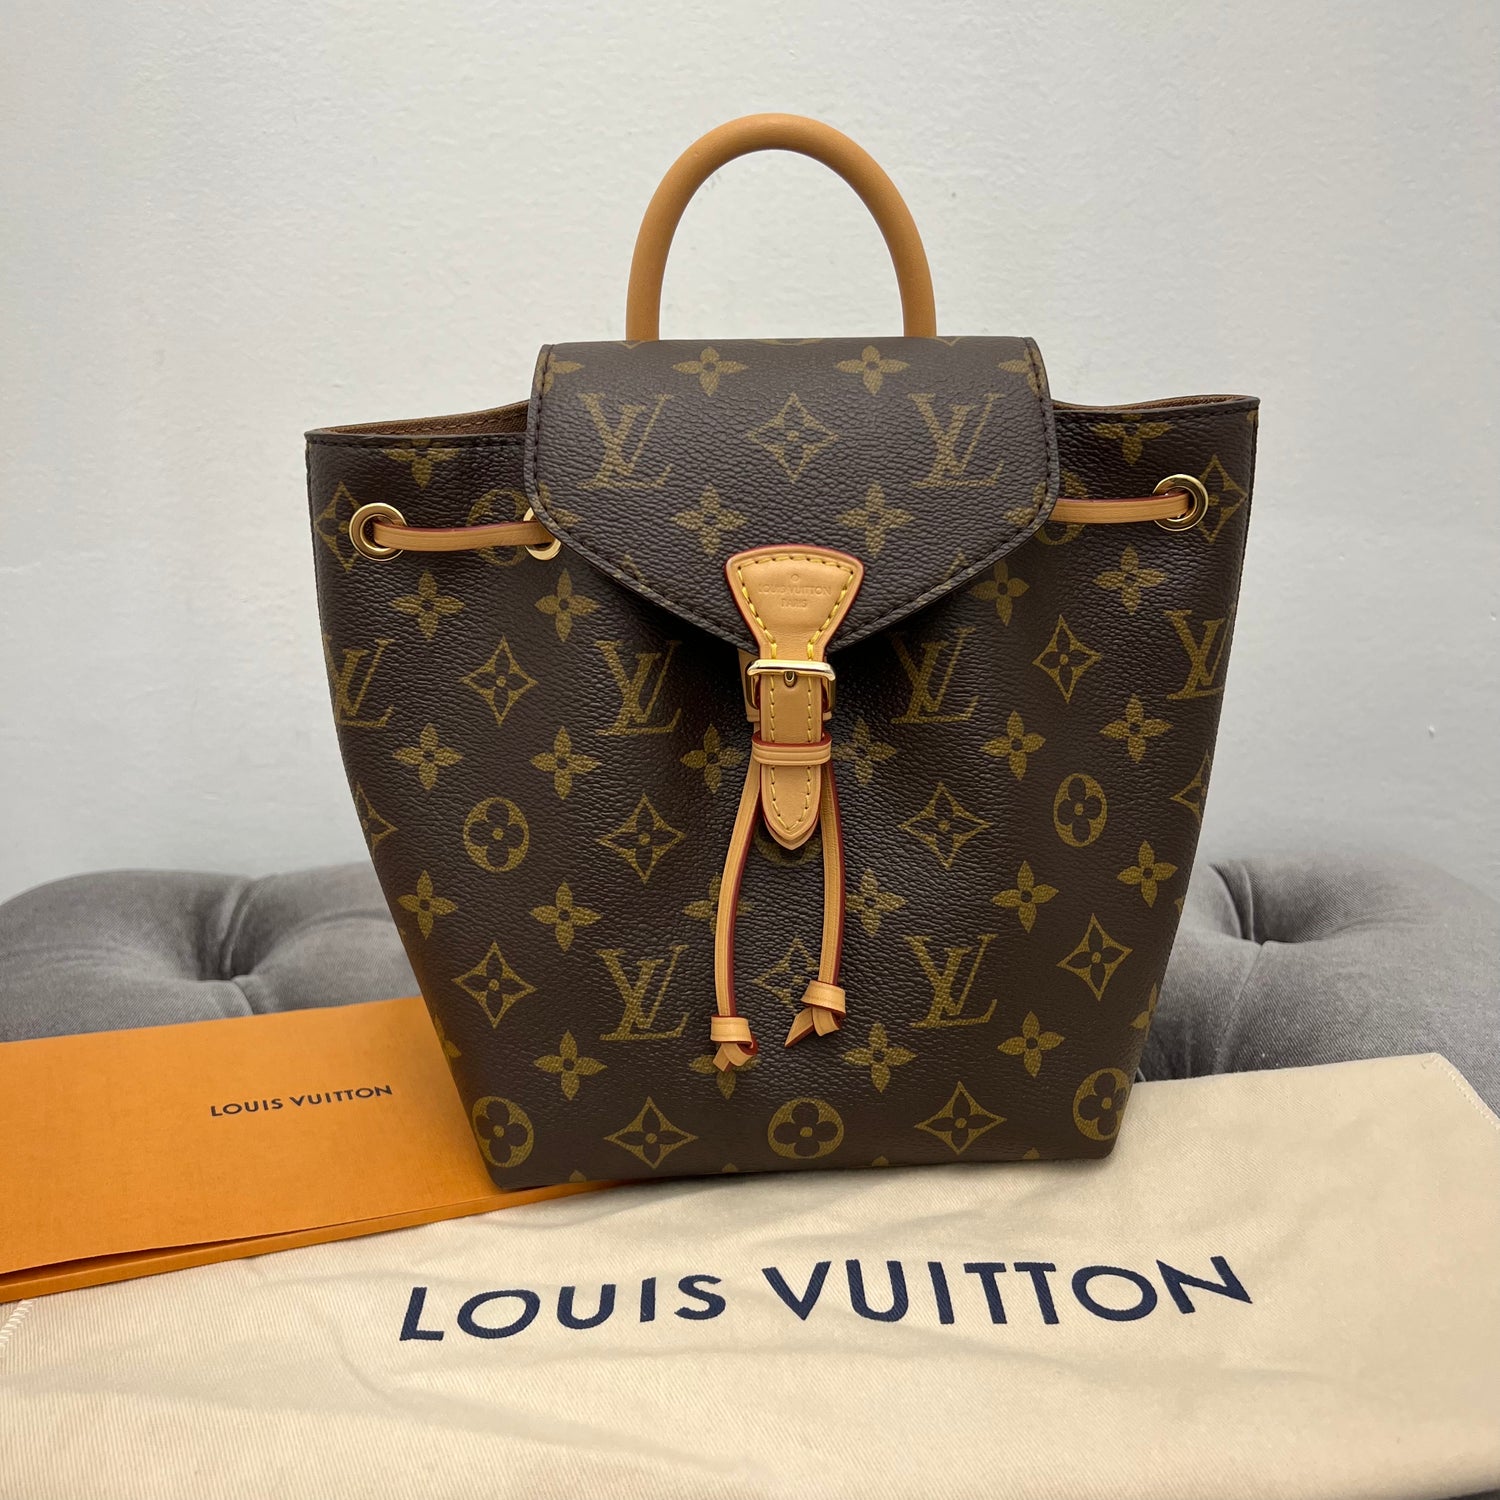 Louis Vuitton - His & Her Consignment Boutique, LLC